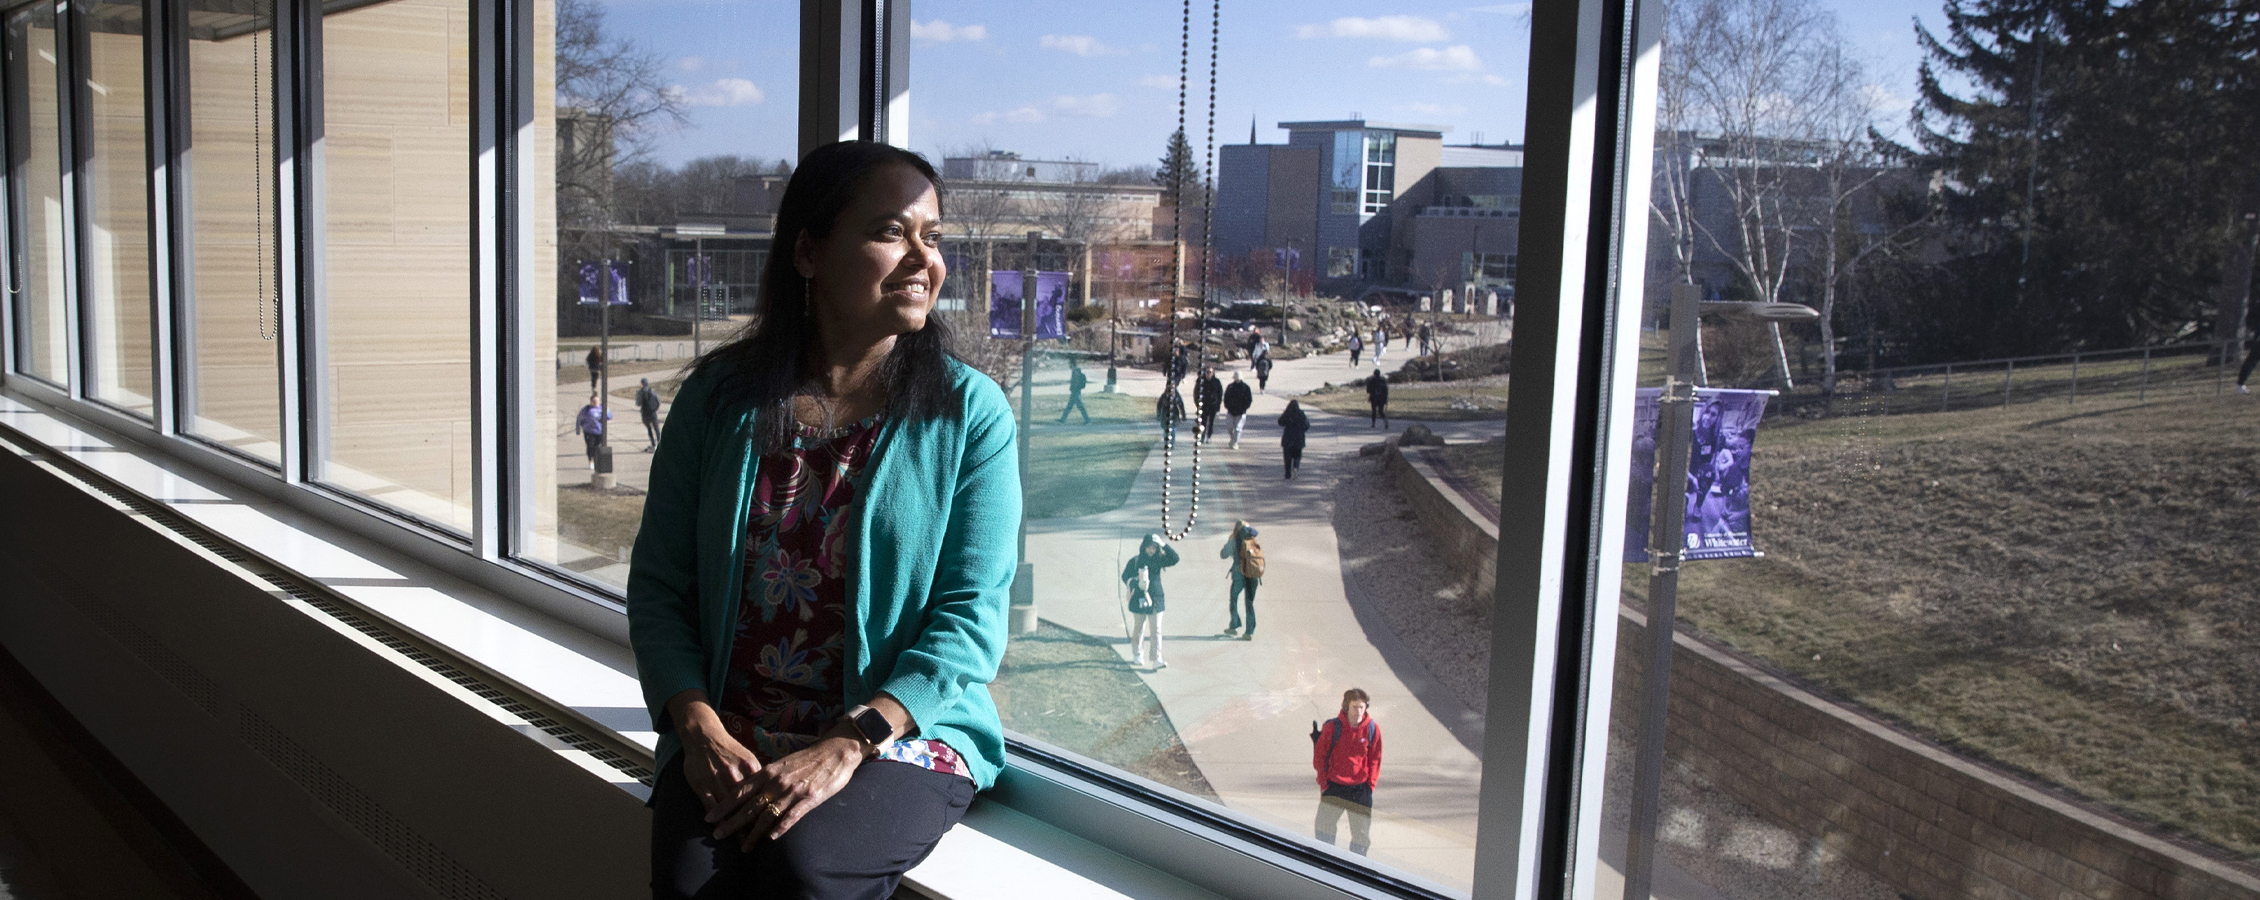 Rashiqa Kamal sits indoors on a windowsill and looks outside.